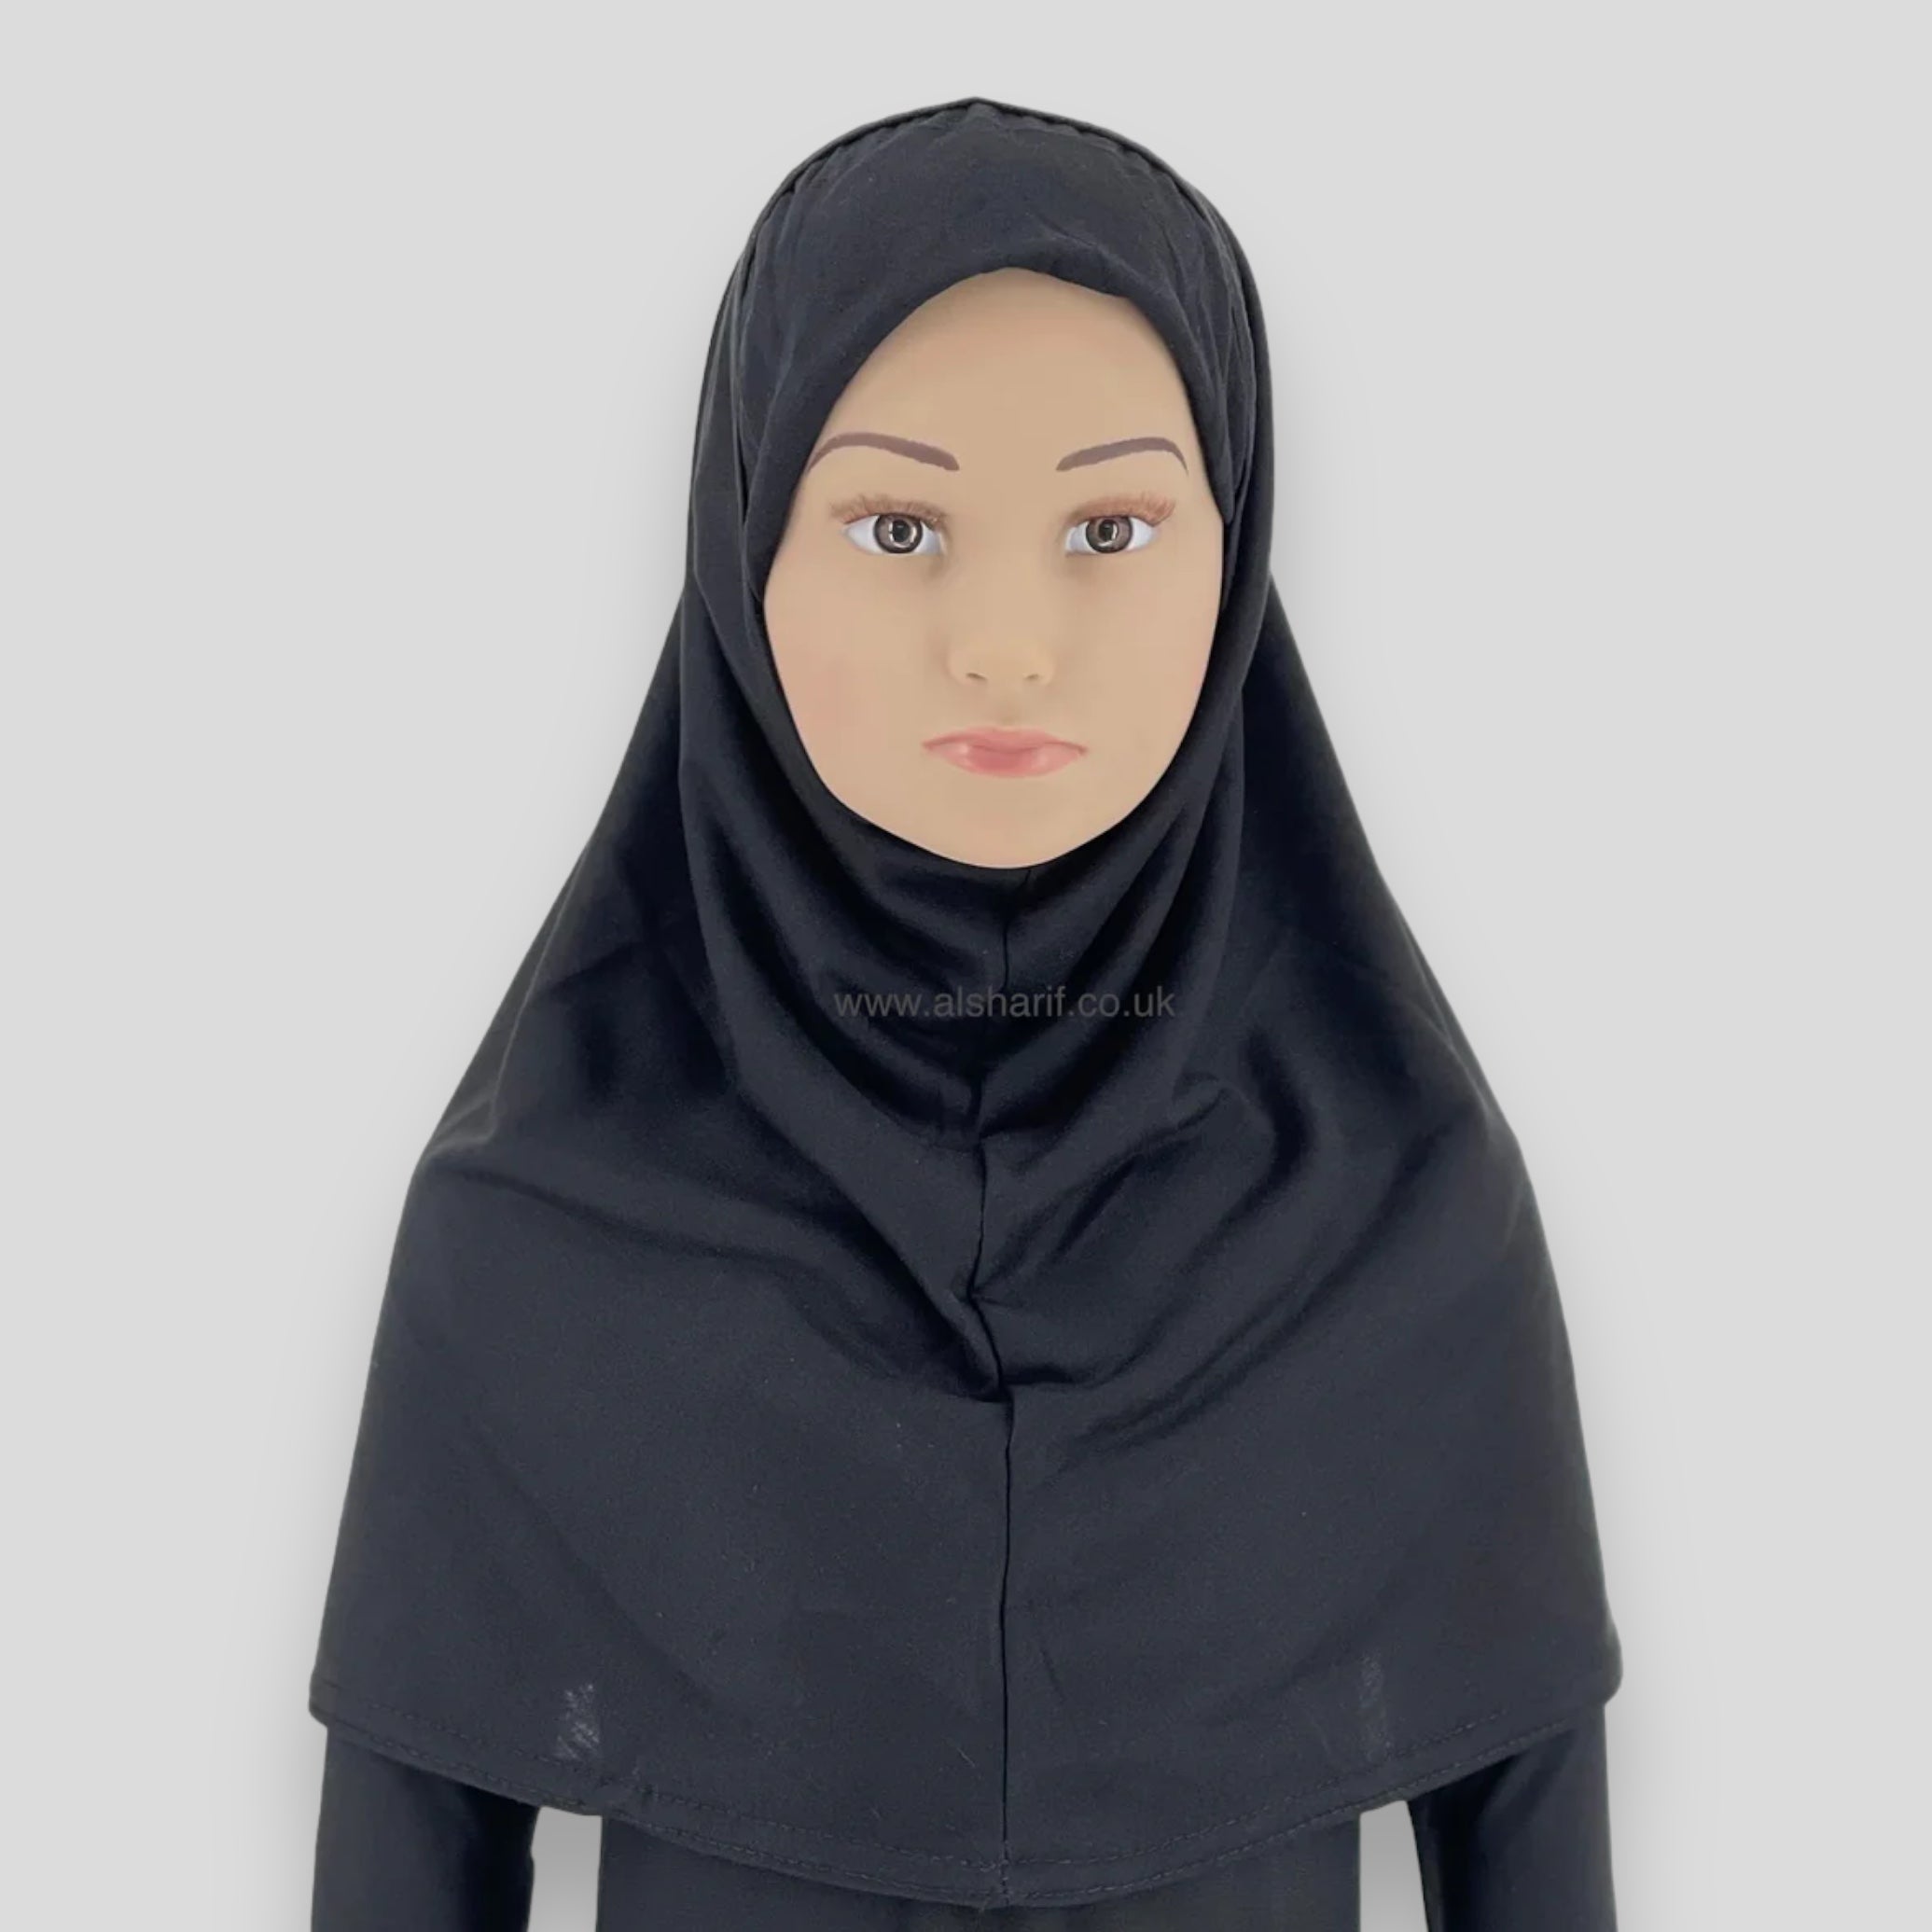 Girls Hijabs Size Medium/Large